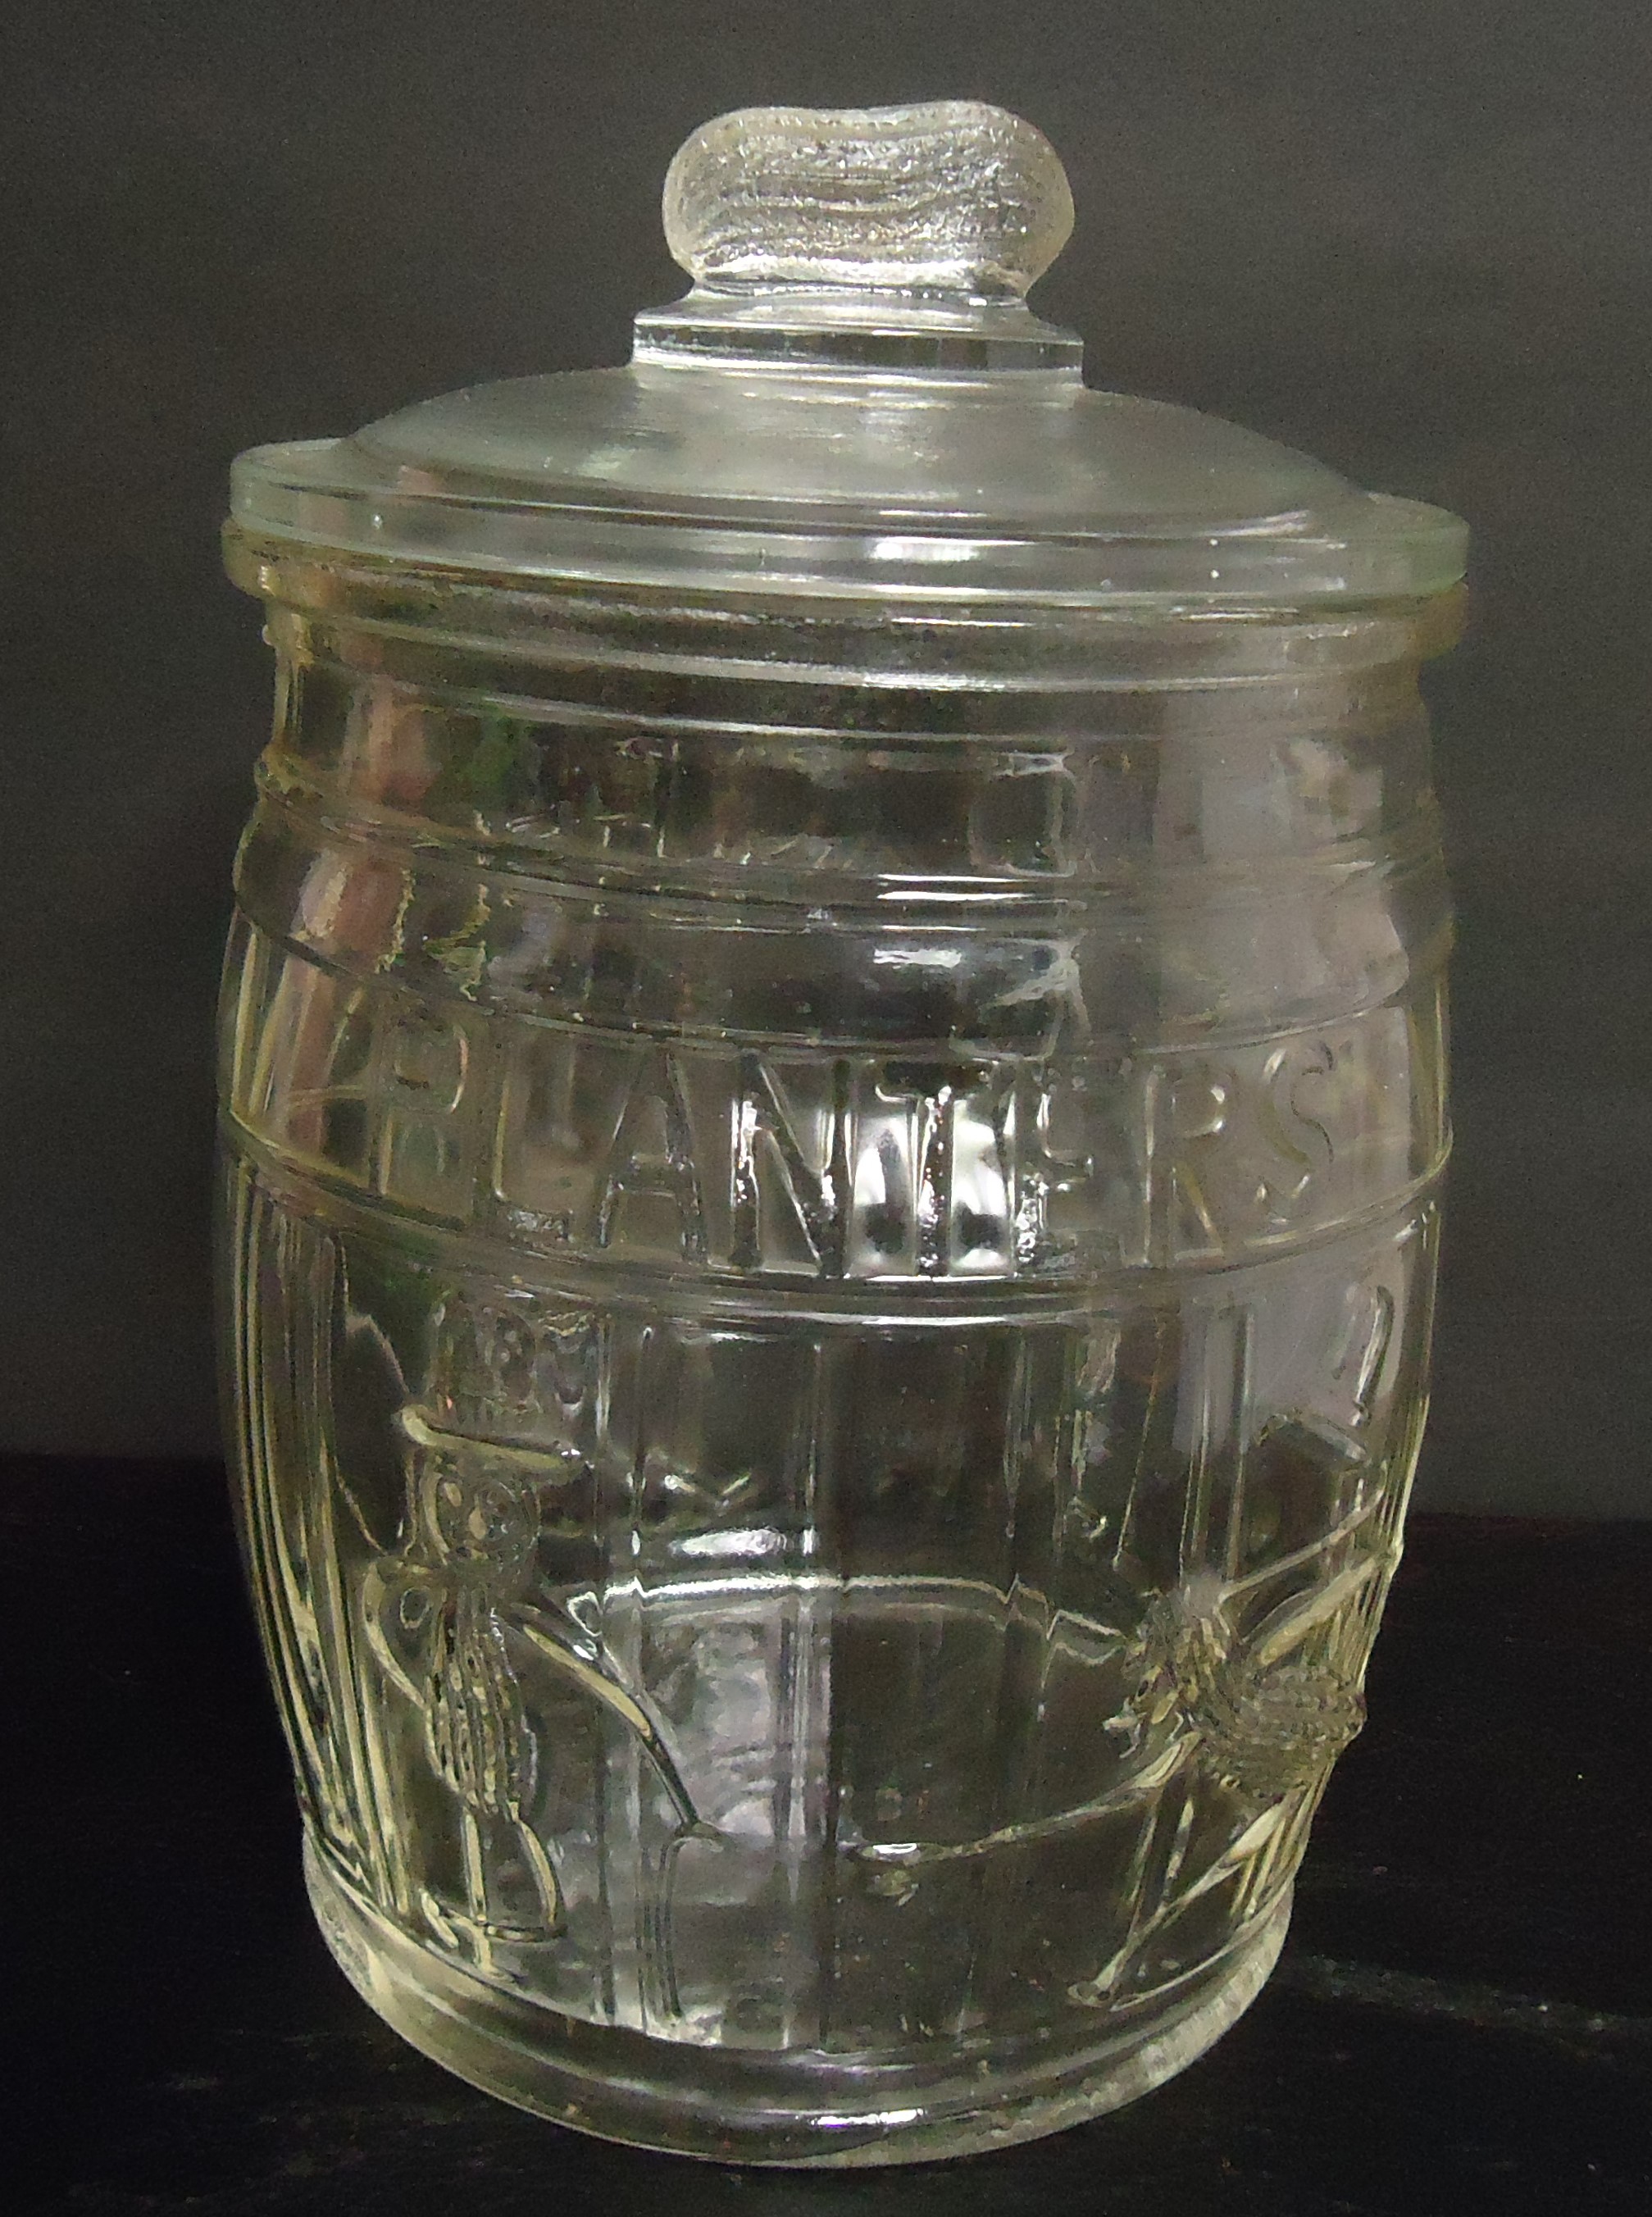 (1H) "Planter" Running Man"
Peanut (Clear Glass) Barrel Jar
$75.00